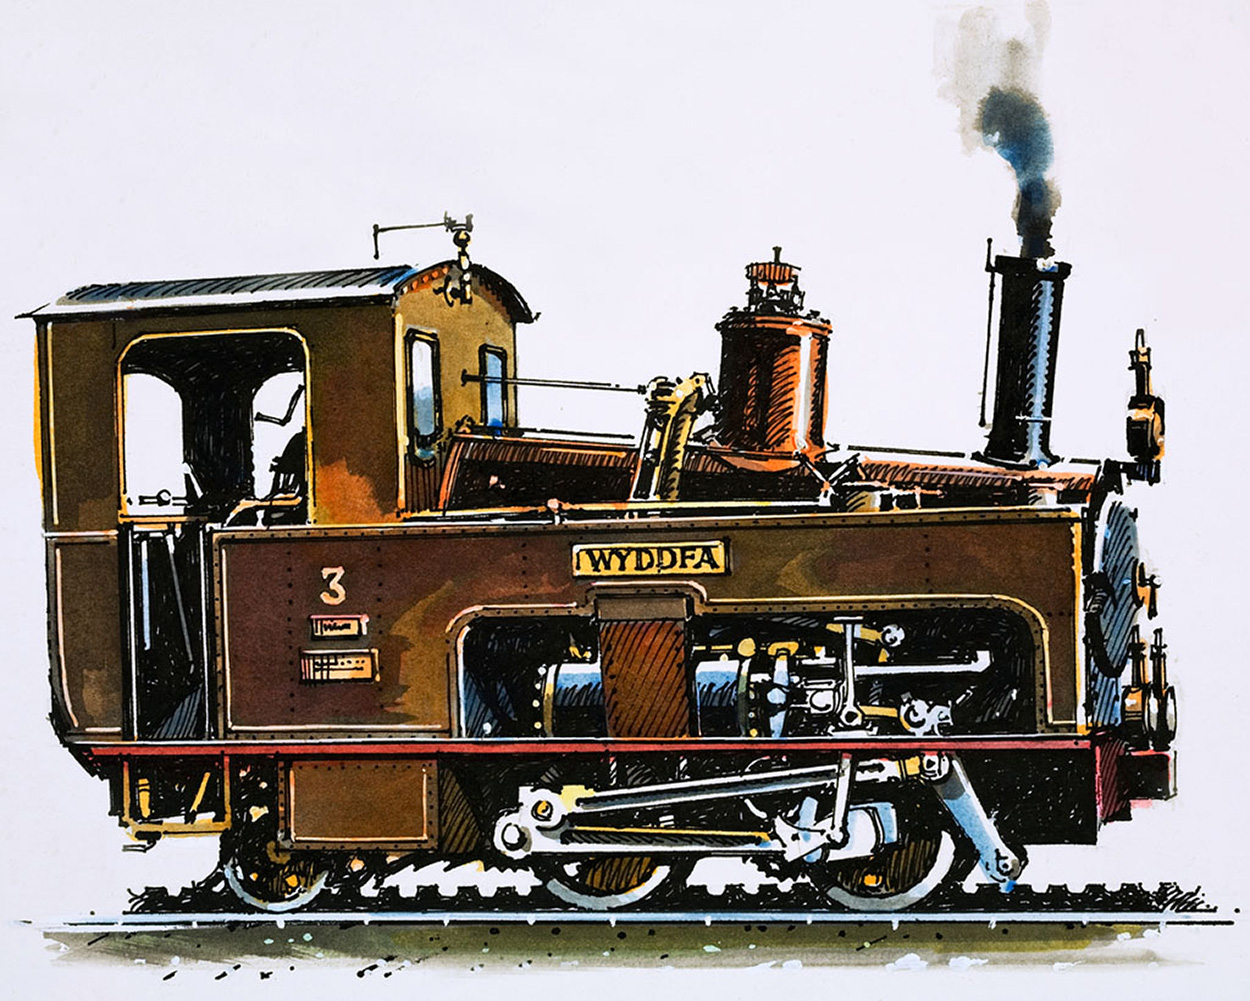 Locomotive of the Snowdon Mountain Railway (Original) art by John S Smith at The Illustration Art Gallery